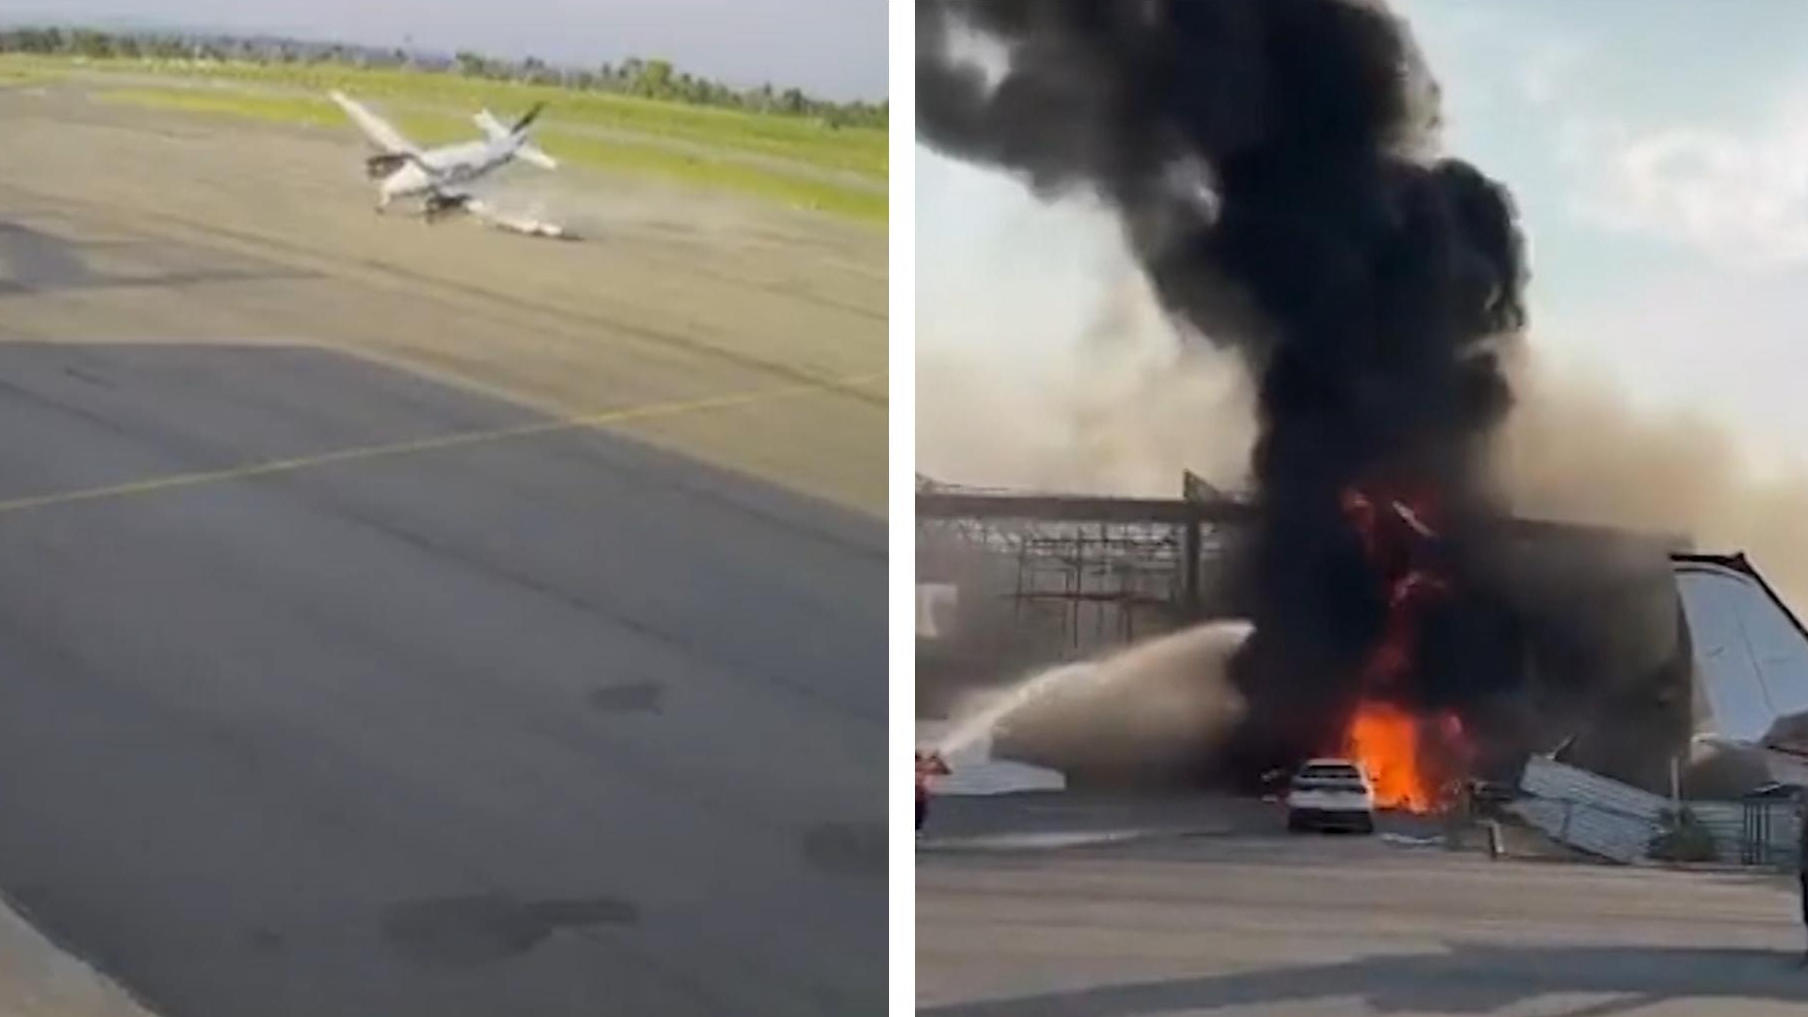 Flugzeug kracht in Hangar - zwei Tote Weil Landung misslingt!